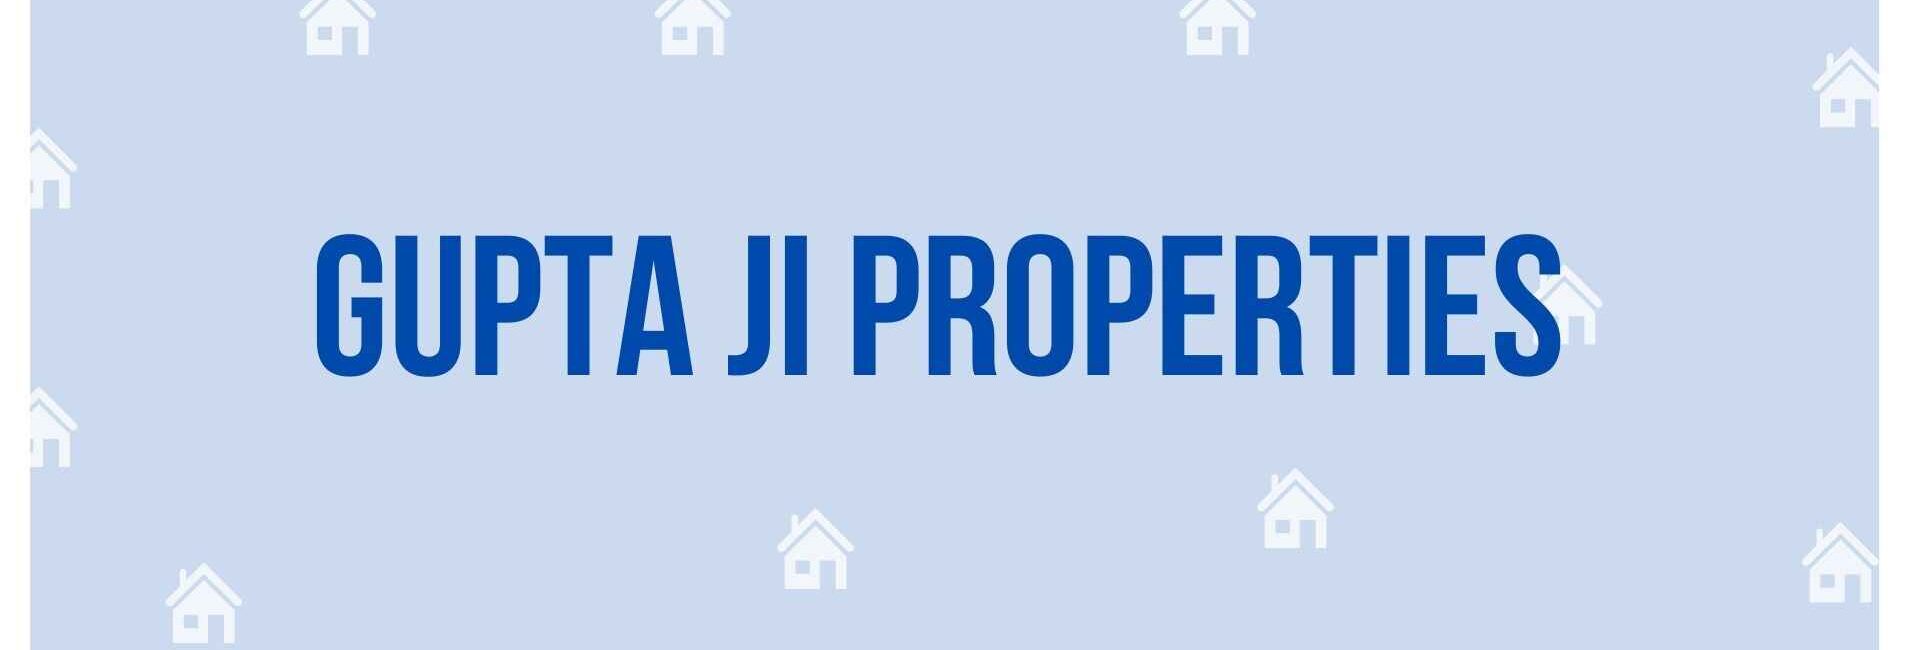 Gupta Ji Properties - Property Dealer in Noida